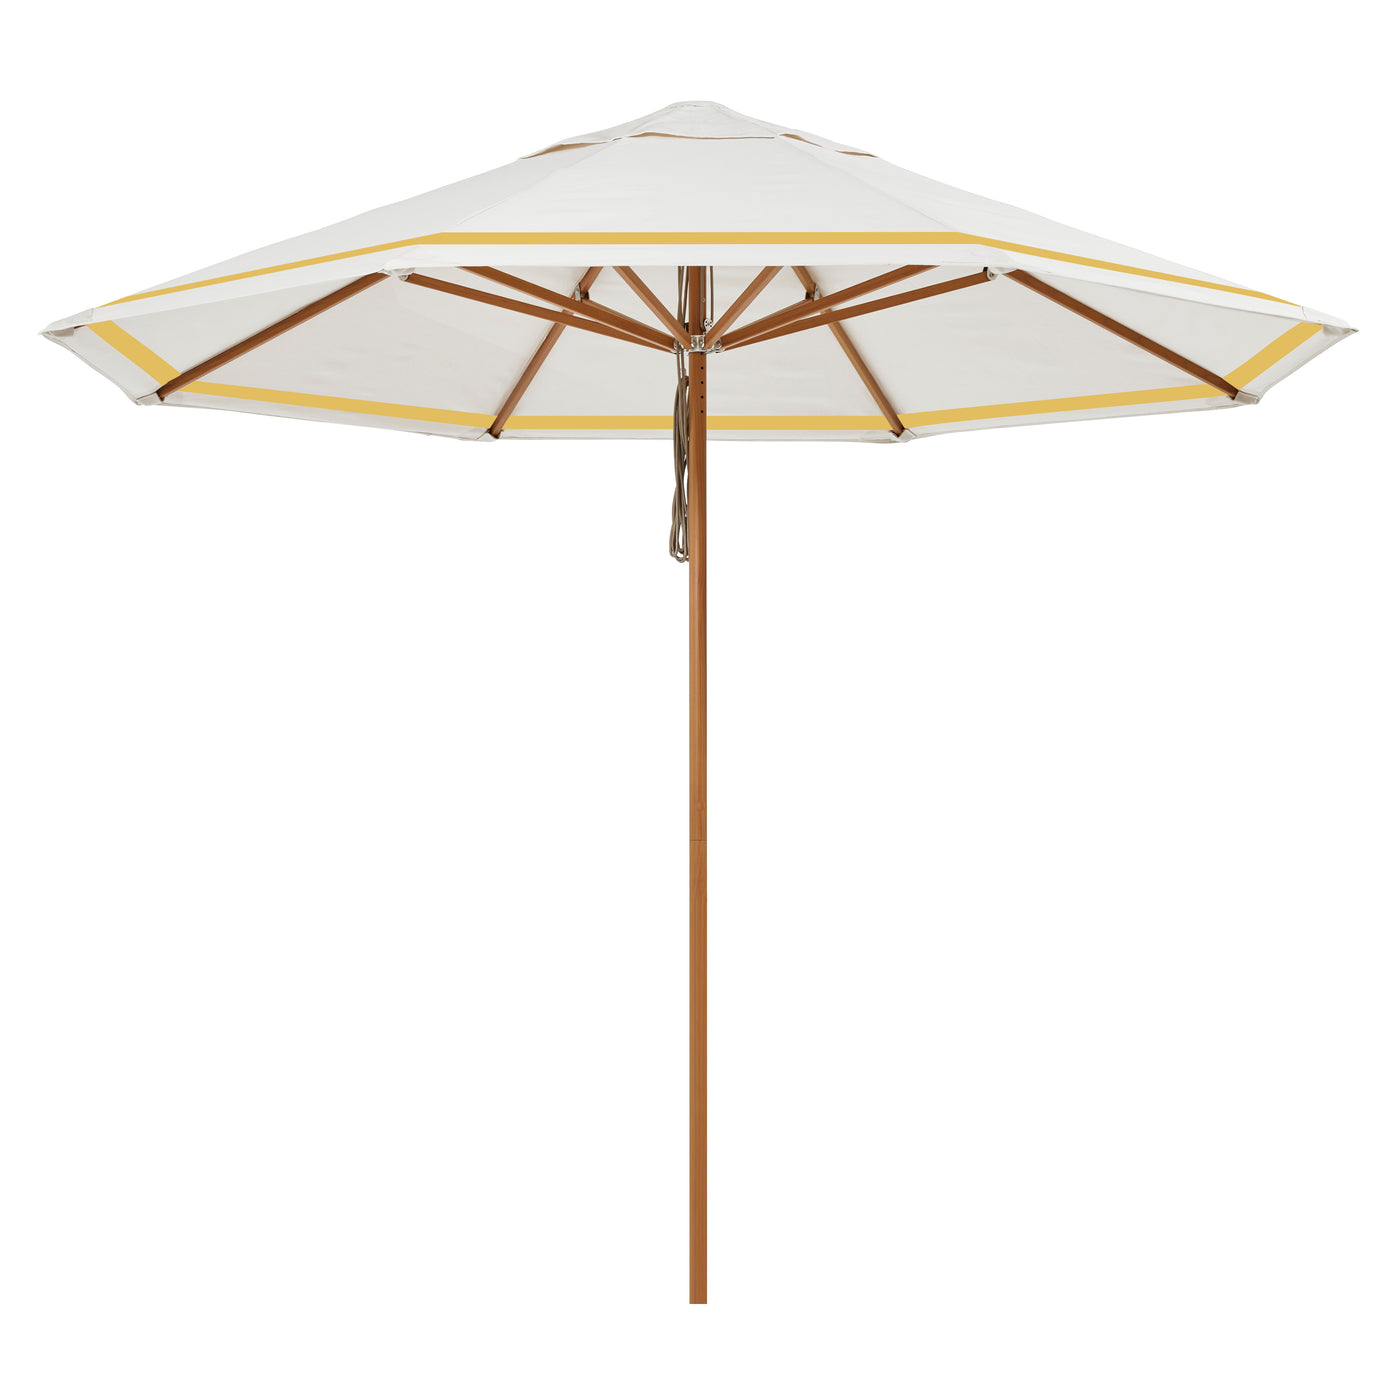 Lucy Montgomery x Basil Bangs - Regatta Umbrella